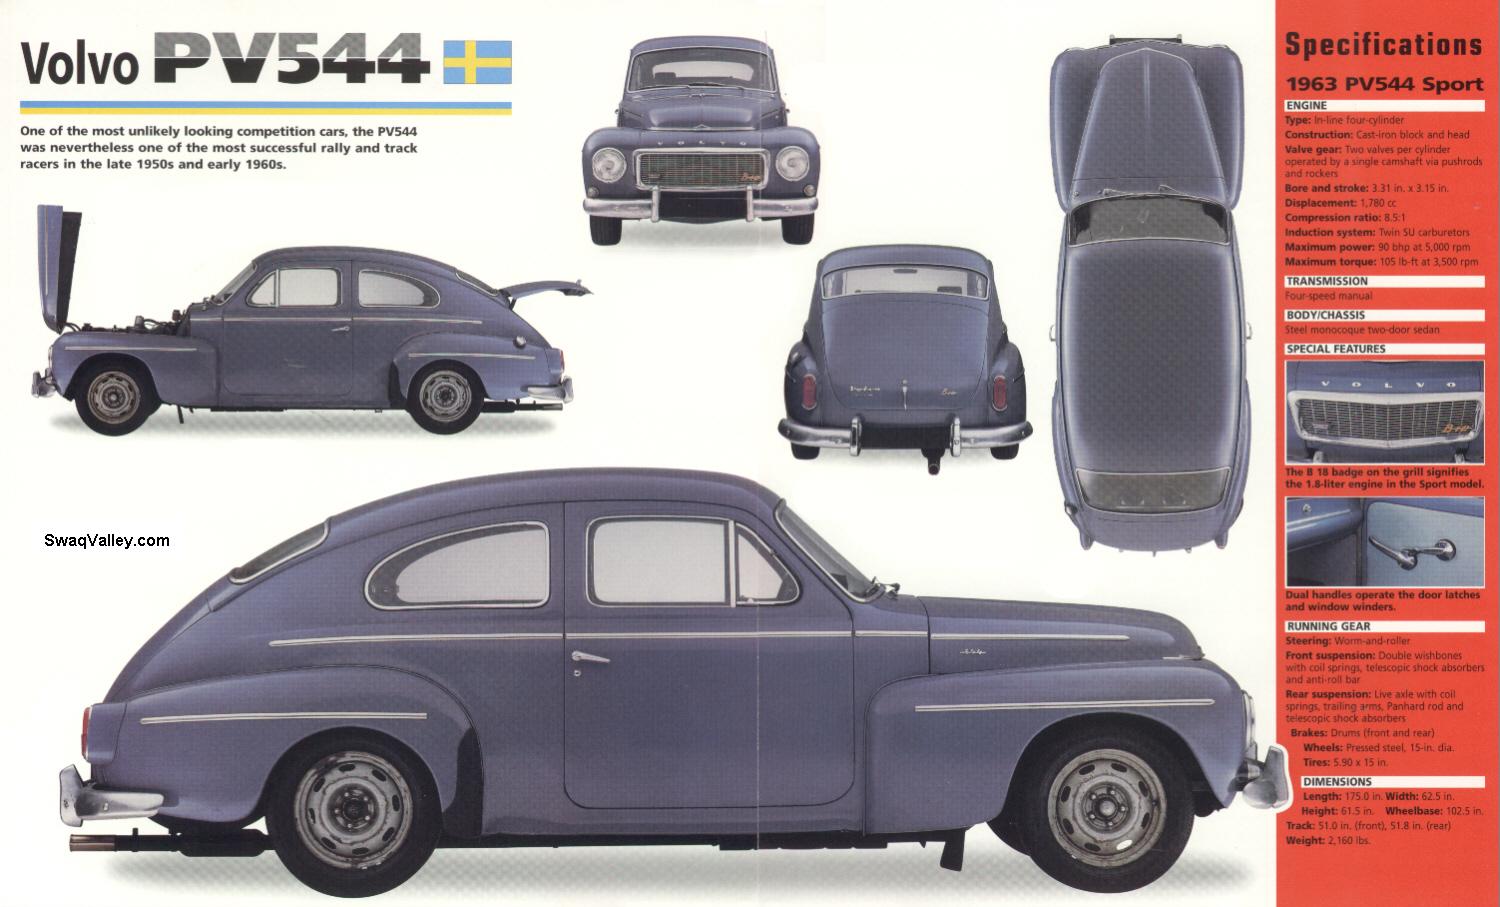 Volvo 544